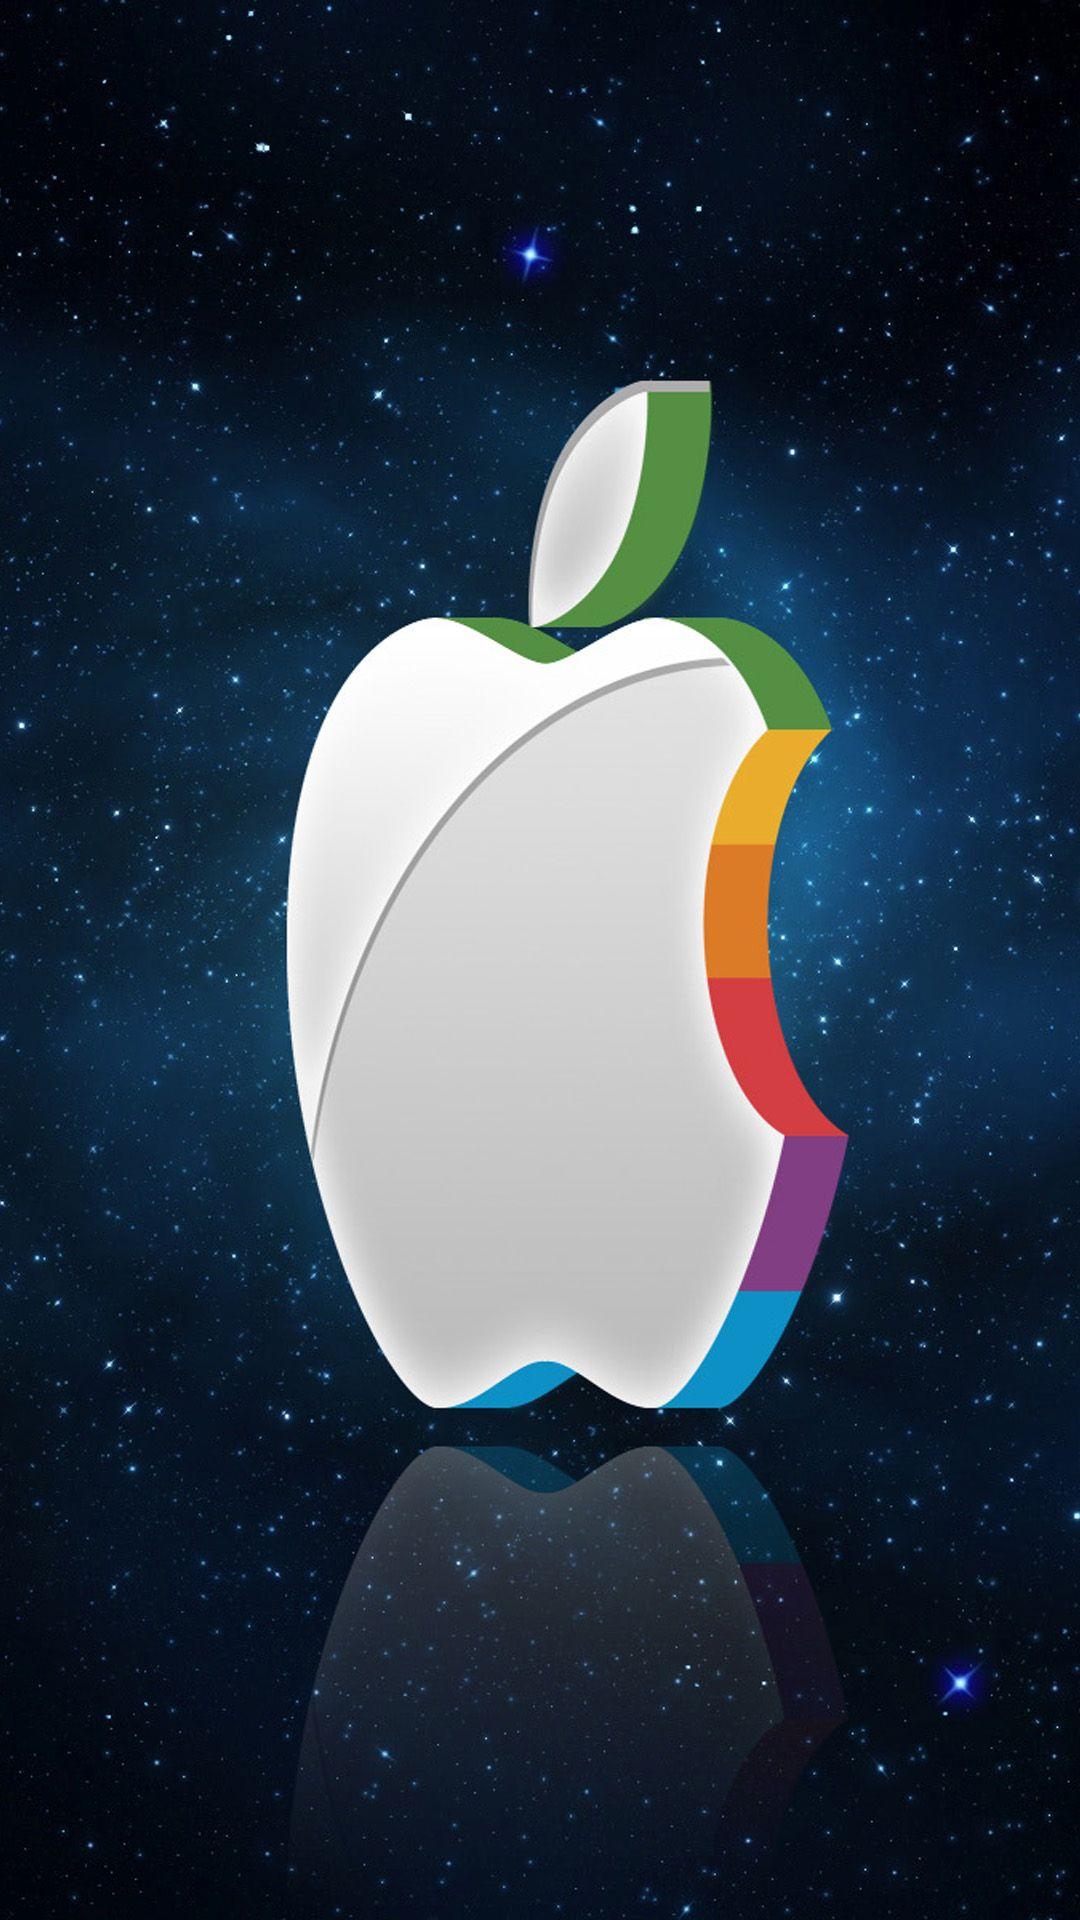 Apple Logo iPhone HD Wallpaper Free Apple Logo iPhone